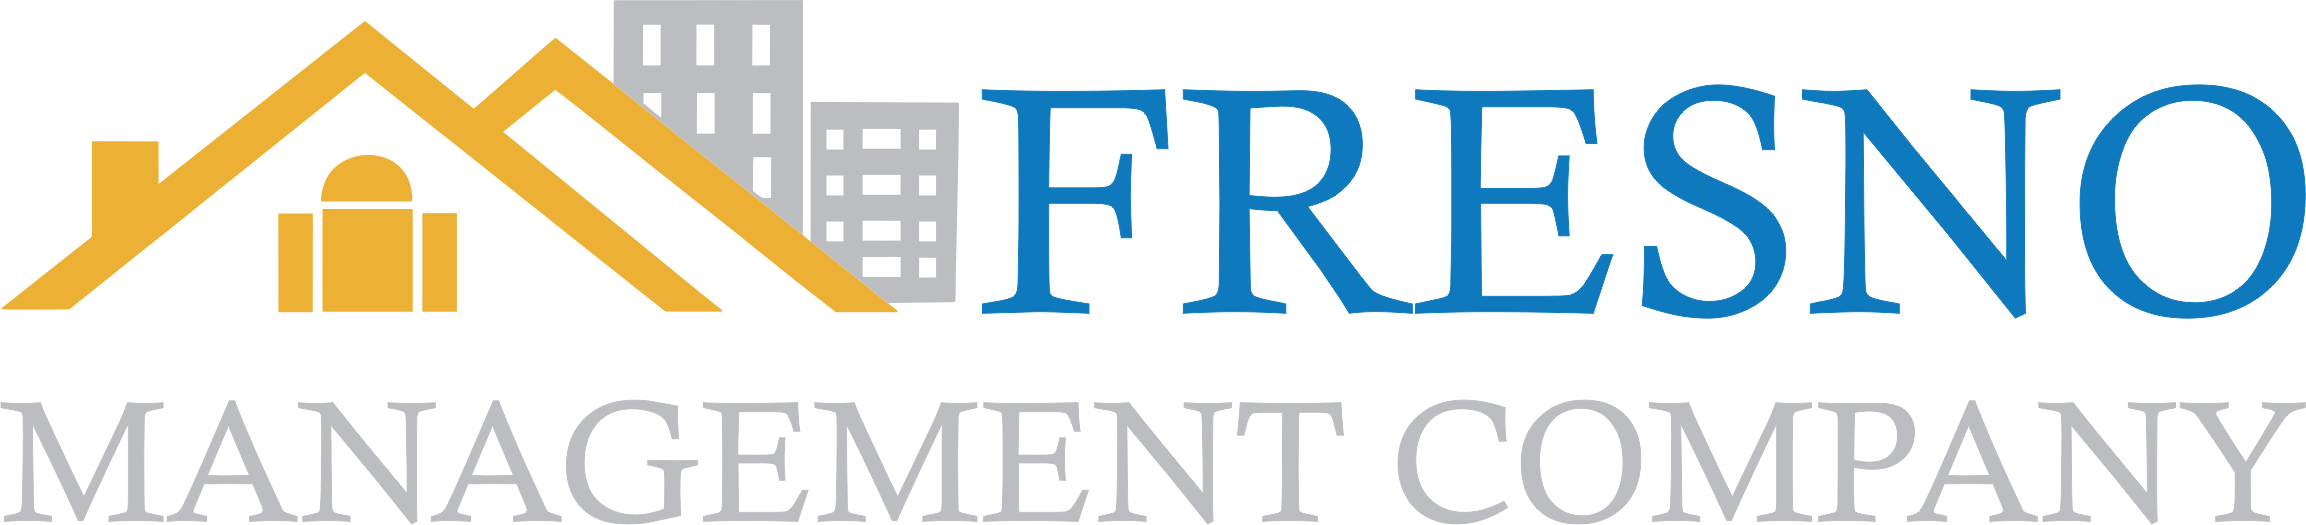 Fresno Management Company logo